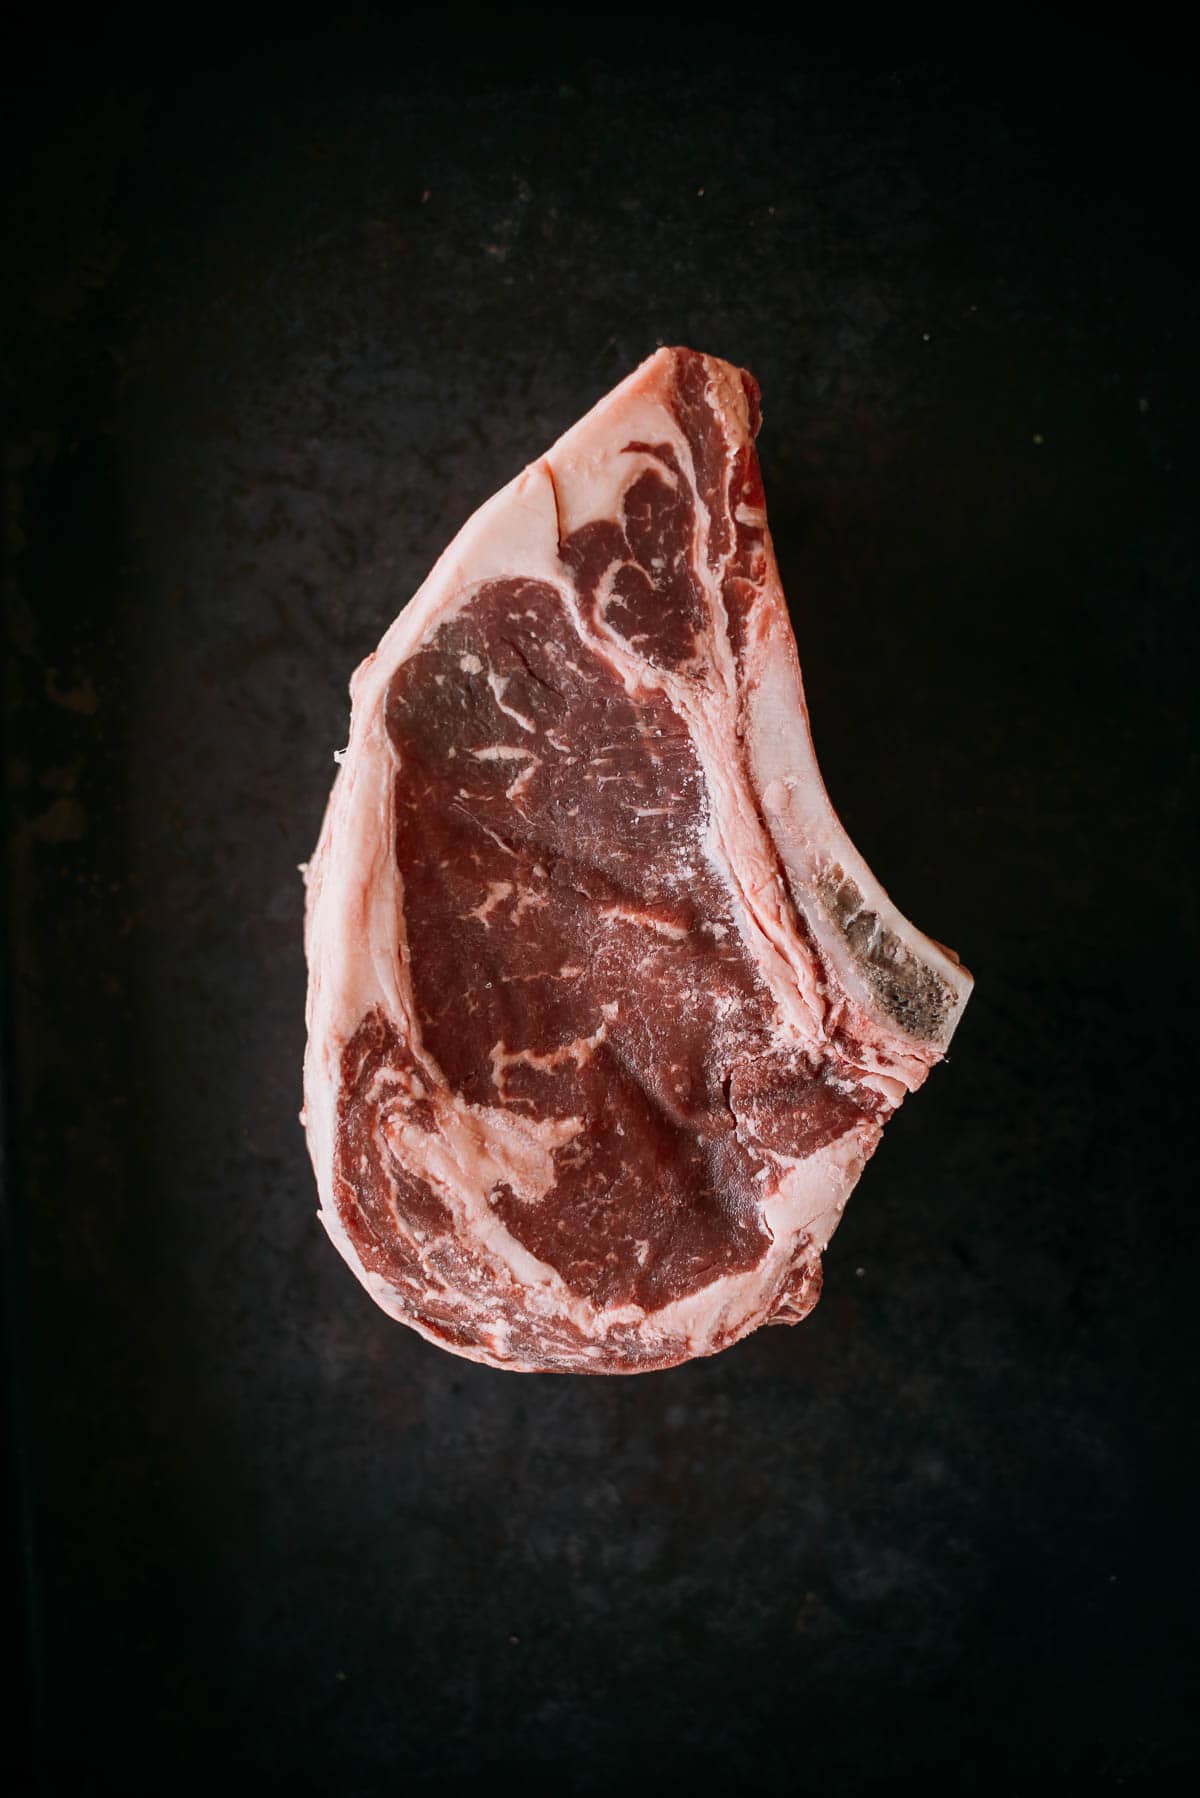 A raw cut of ribeye steak with a visible bone on a dark surface.